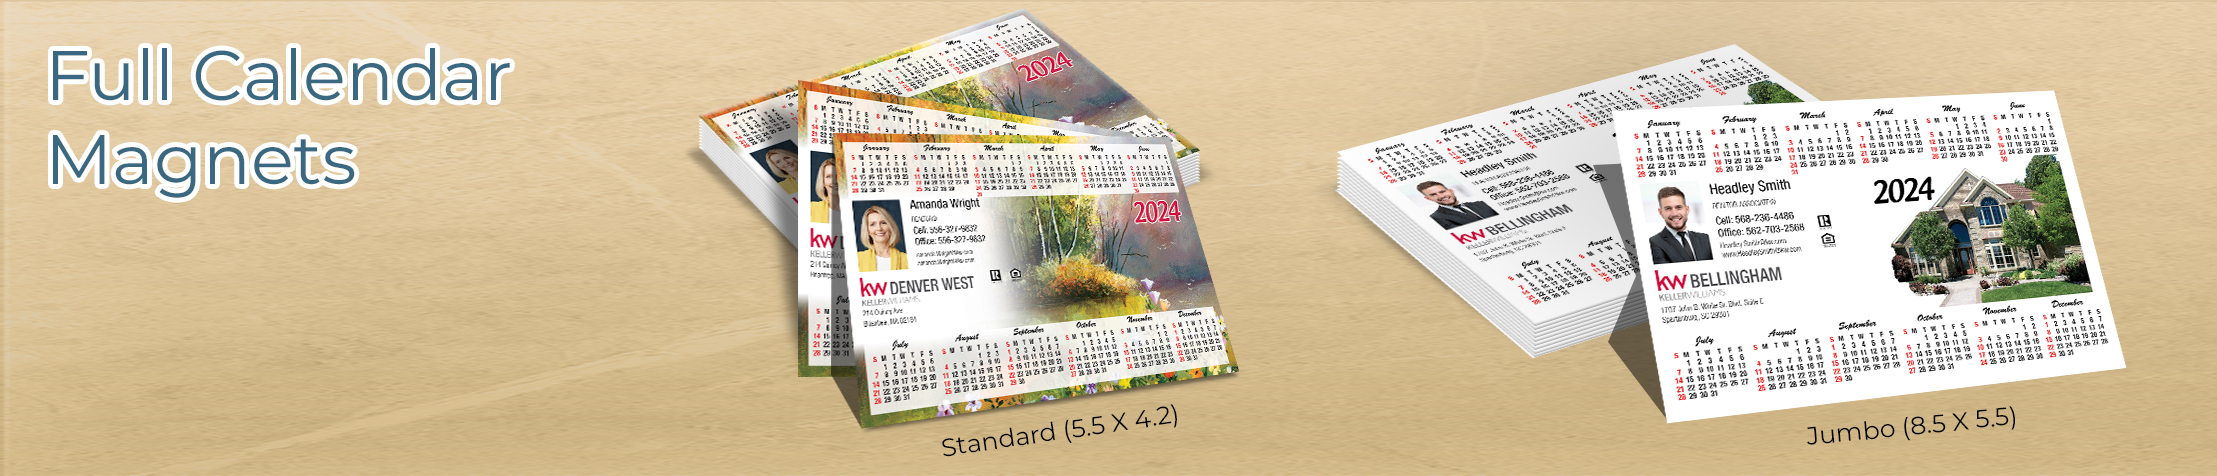 Keller Williams Real Estate Full Calendar Magnets - KW approved vendor 2019 calendars in Standard or Jumbo Size | BestPrintBuy.com